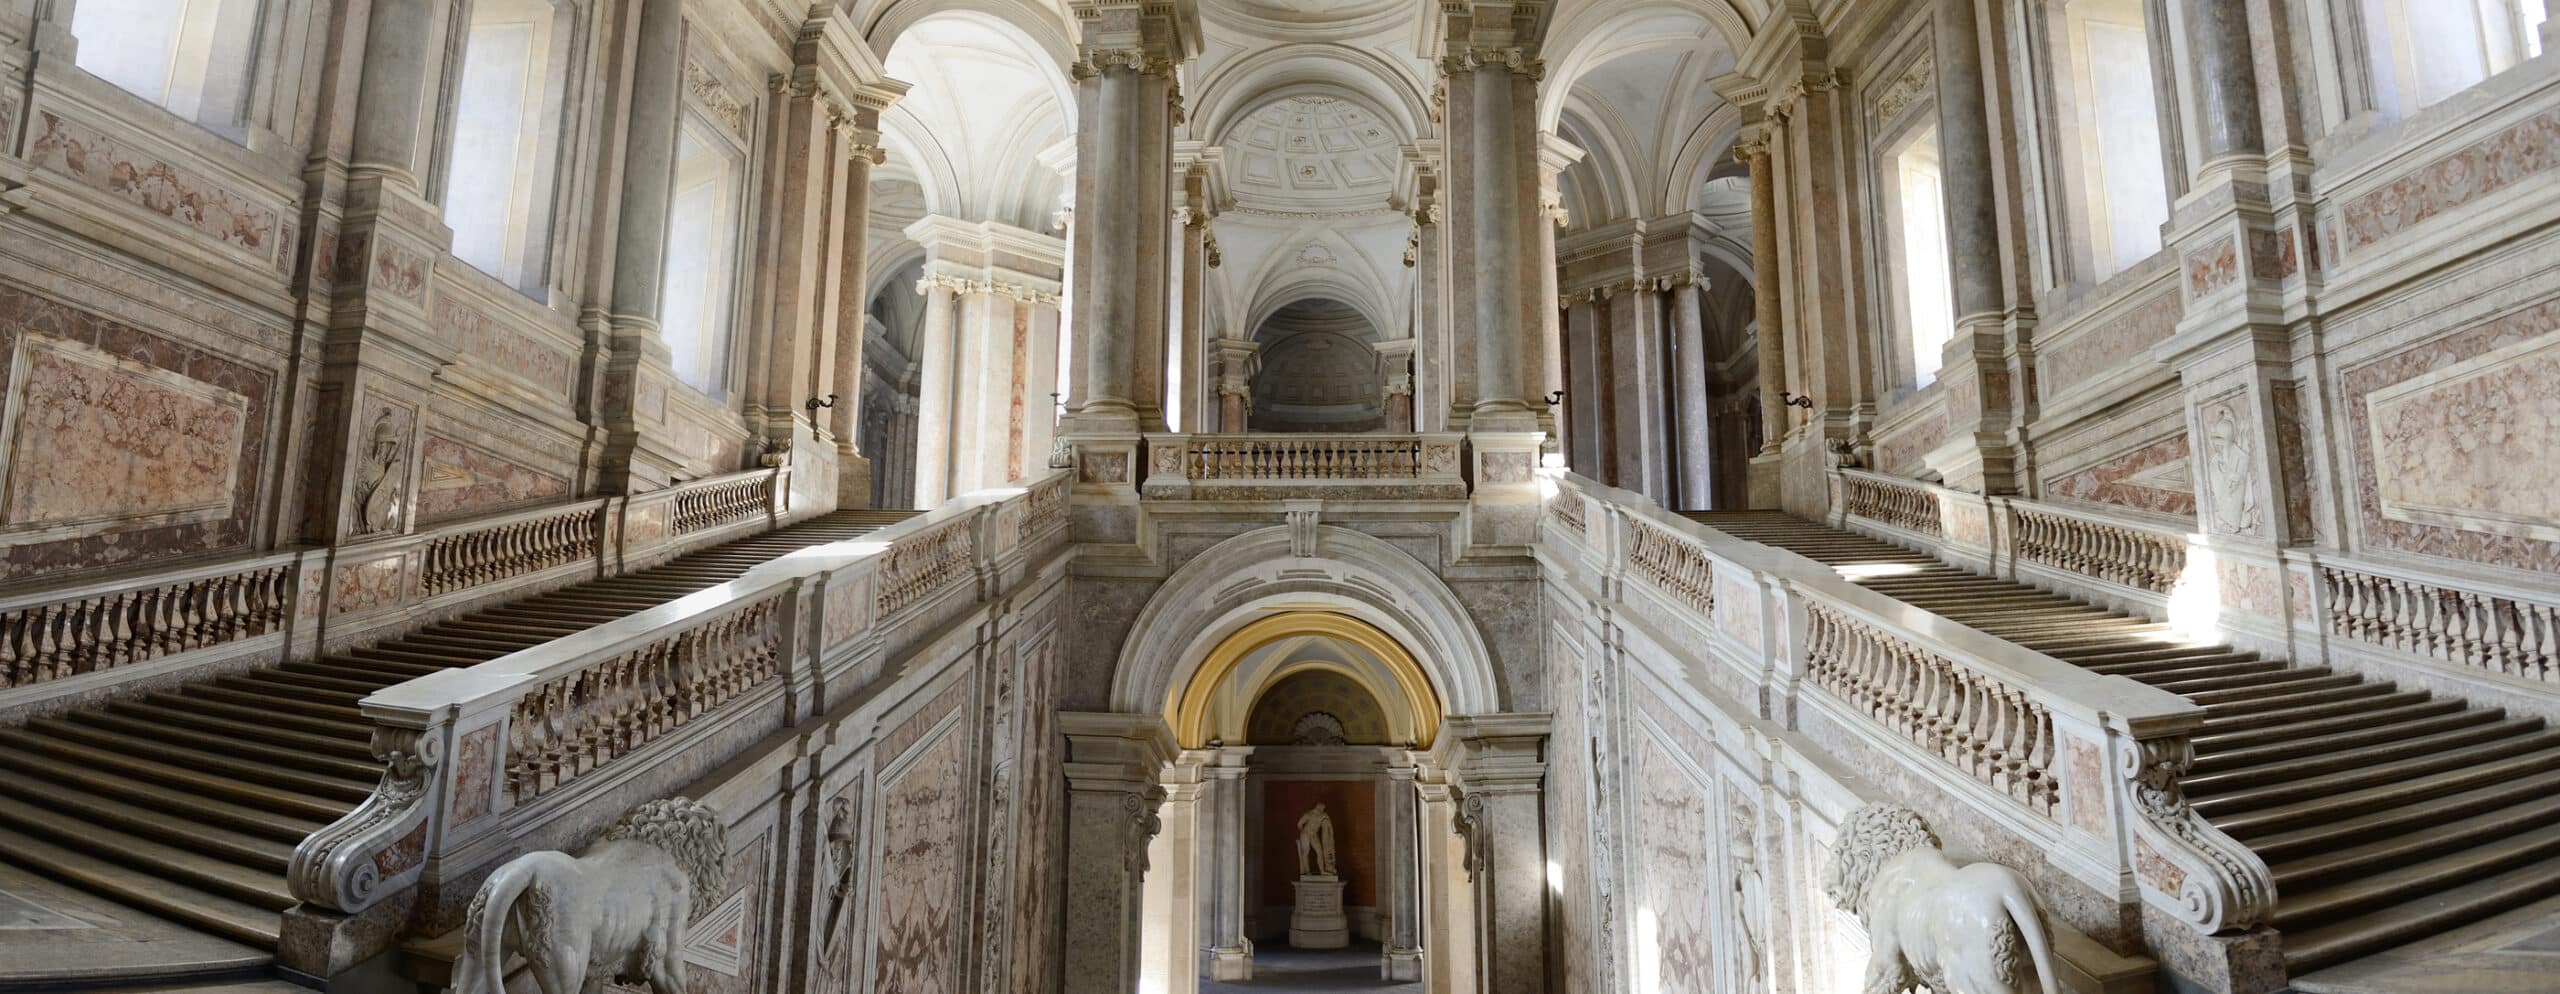 bigstock-Interior-Of-Caserta-Palace-60013235.jpg